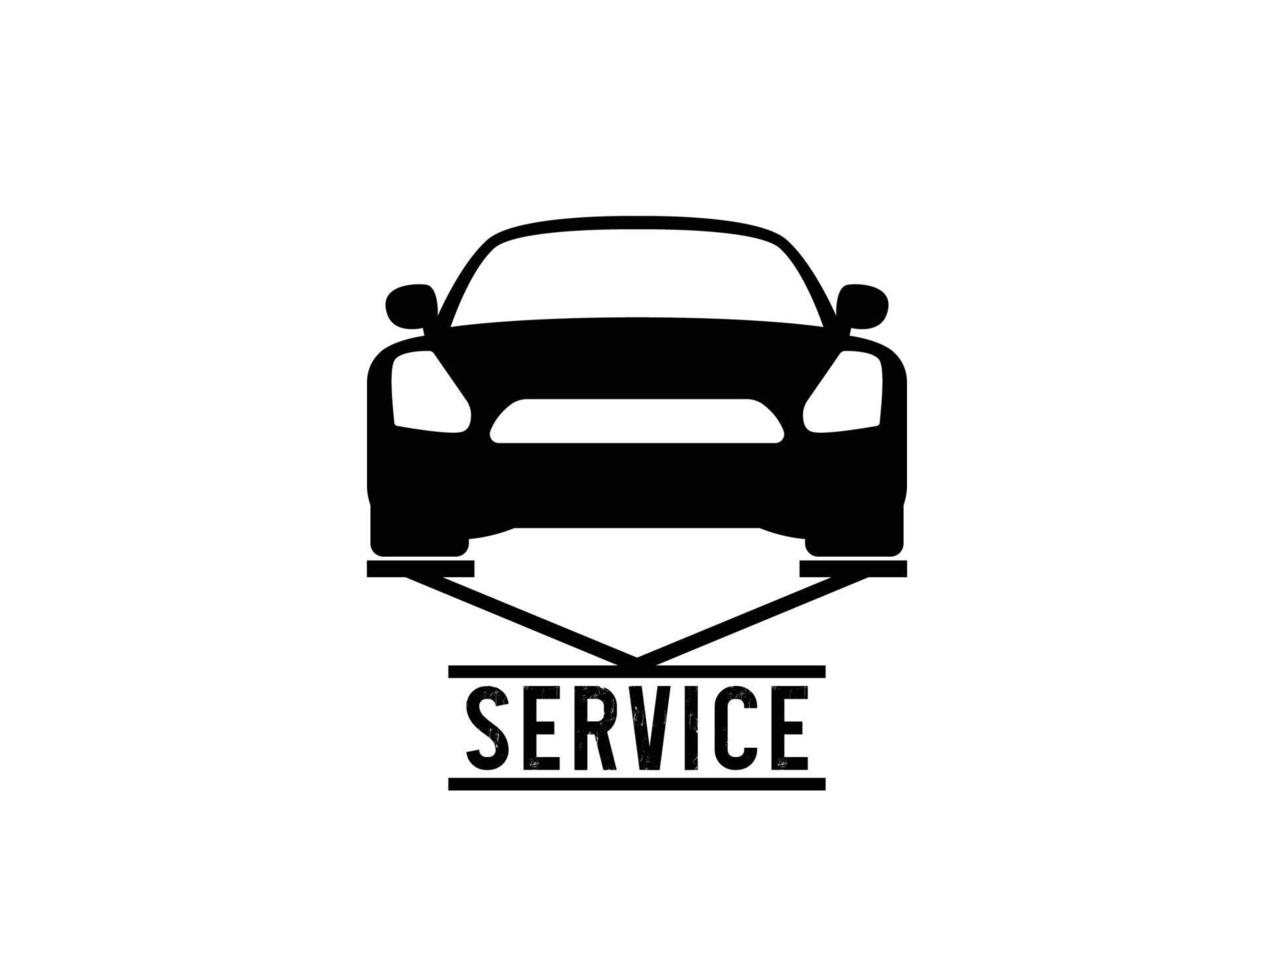 Car service logo design illustration vector